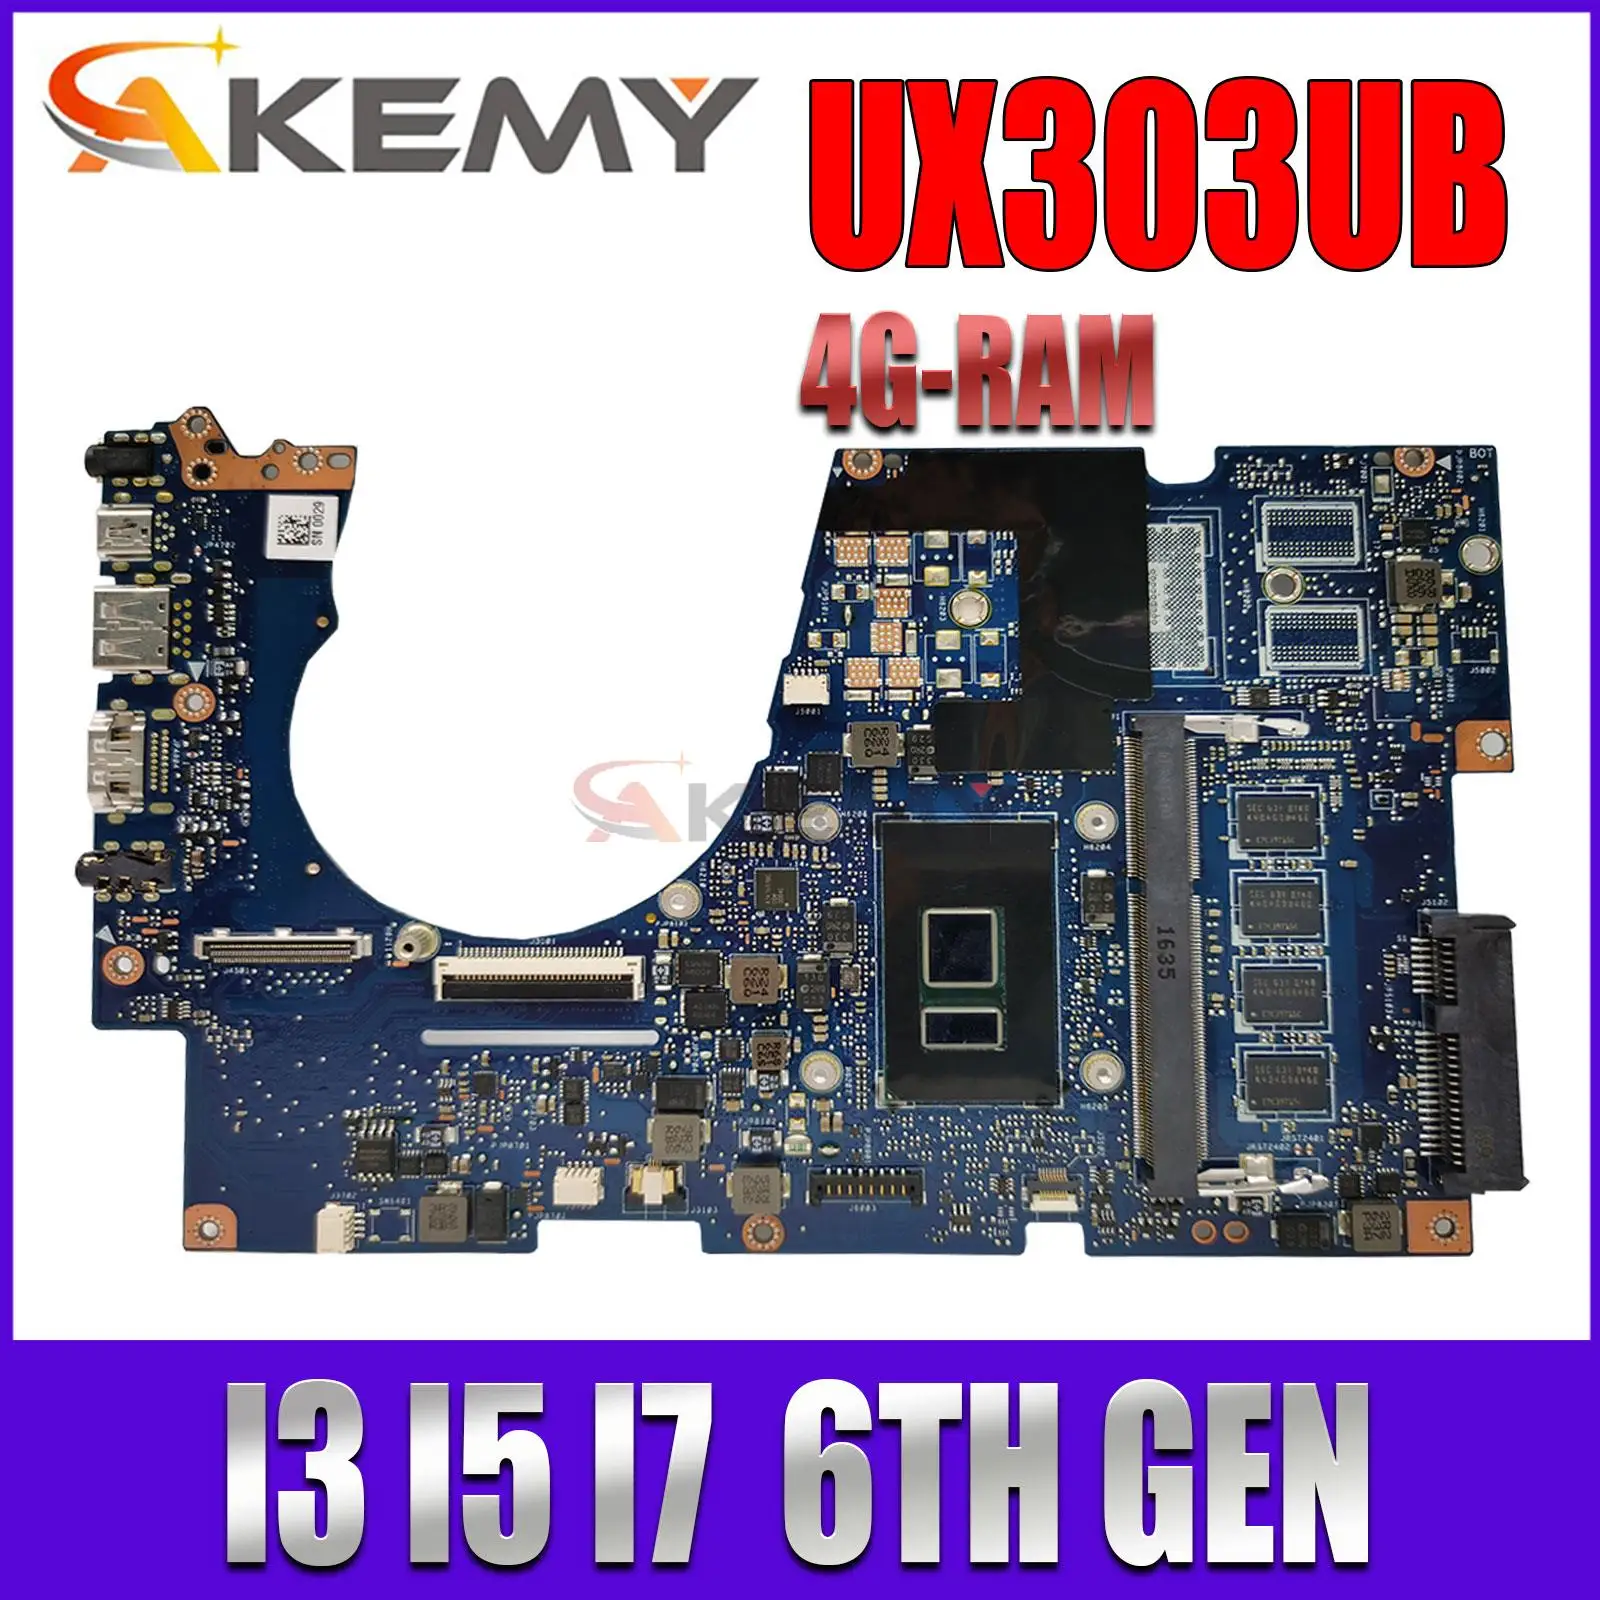 

Mainboard UX303 UX303U BX303UA UX303UB UX303UA U303UB U303UA Laptop Motherboard I3 I5 I7 6th Gen 4GB/RAM UMA/PM MAIN BOARD